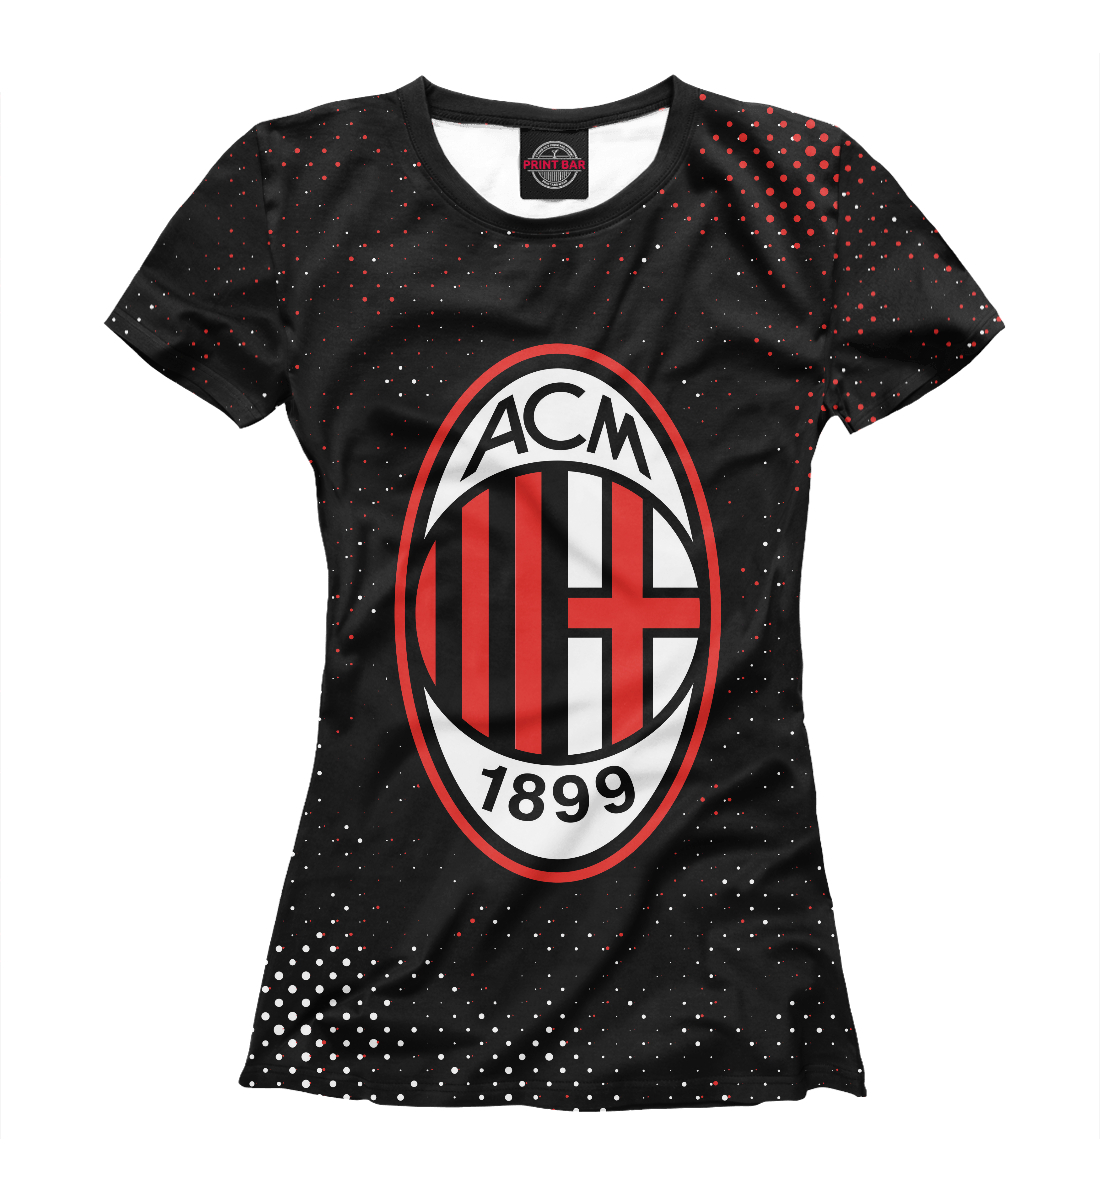 Женская Футболка AC Milan / Милан, артикул ACM-978207-fut-1mp